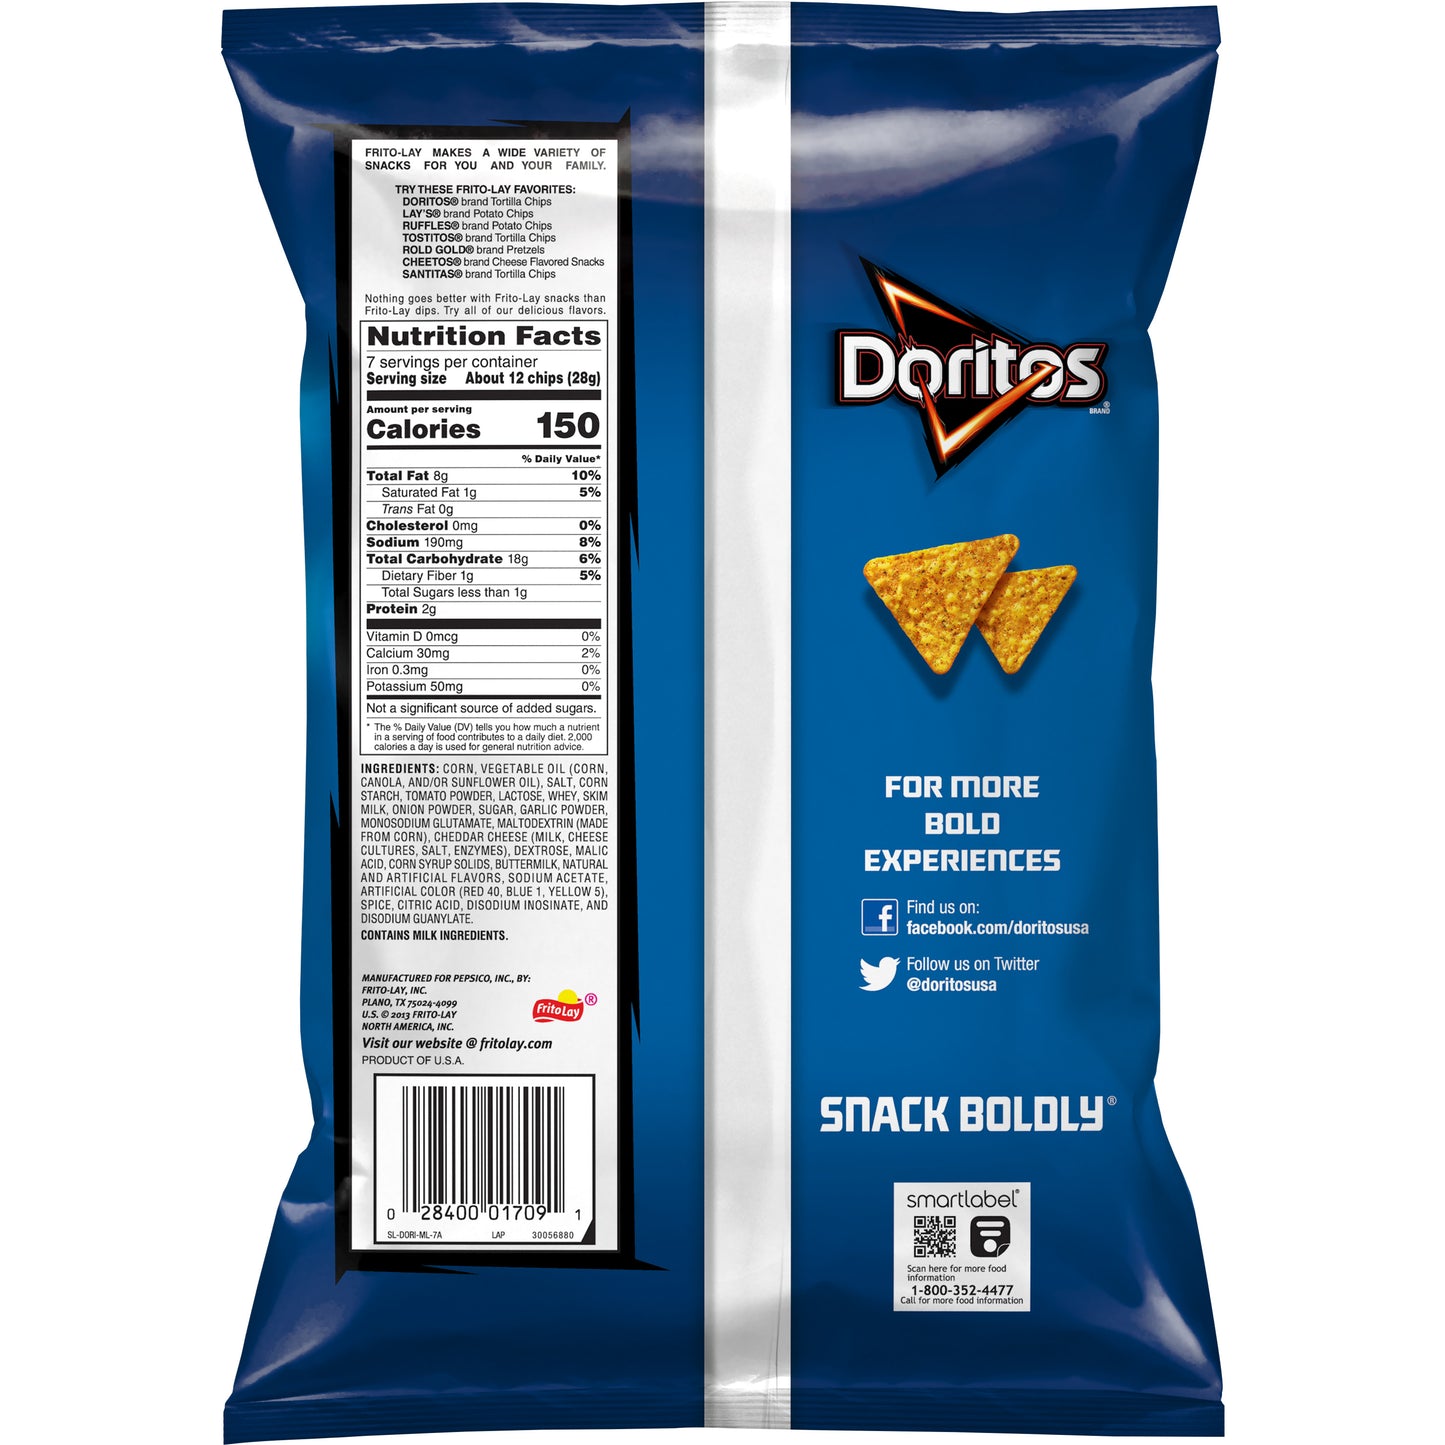 Doritos Cool Ranch Flavored Tortilla Chips, 7 OZ (198g) - Export